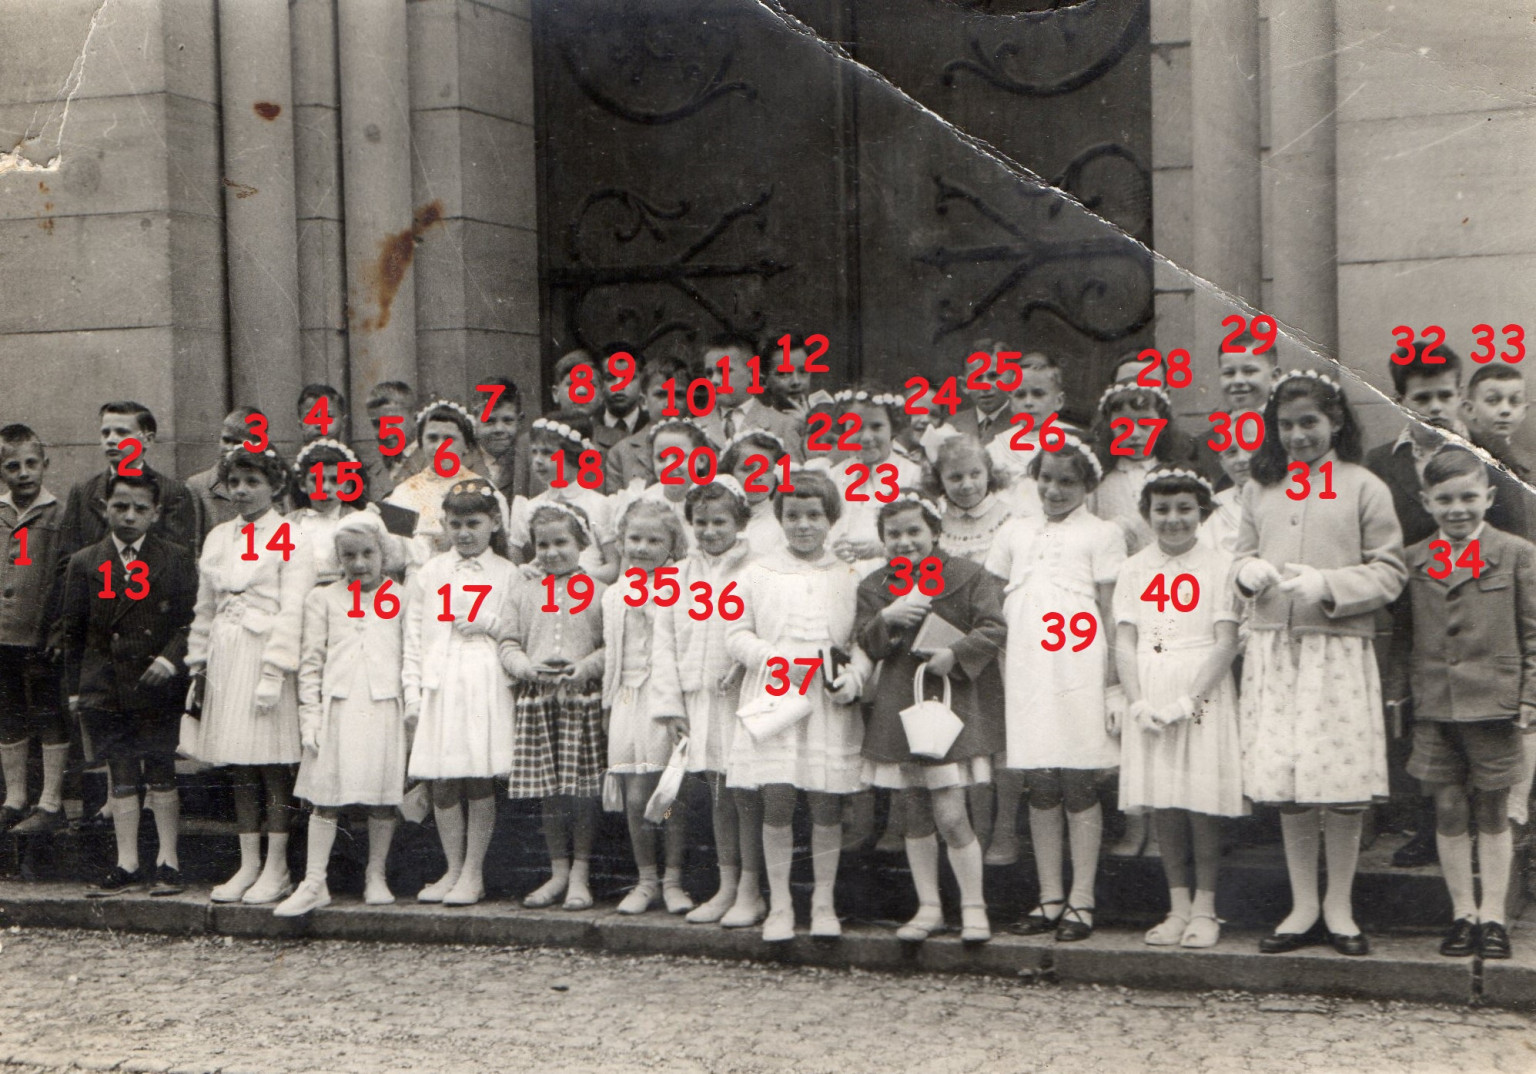 1958 Communiants  - HAUT – 1, 2, 3, 4 Gerard Schlatter ,5 ,6, 7, 8, 9 ,10 ,11, 12 Daniel Viotti ,13, 14, 15, 16 Geneviève Mercier. - MILLIEU – 17, 18, 19, 20, 21, 22, 23 ,24 ,25 , 26 Dominique Briaucourt , 27, 28 , 29 Pierre Rémy  ,30 - BAS – 31, 32, 33 ,34, 35 ,36, 37 ,38, 39 ,40 Eliane Yoder ,  41 .